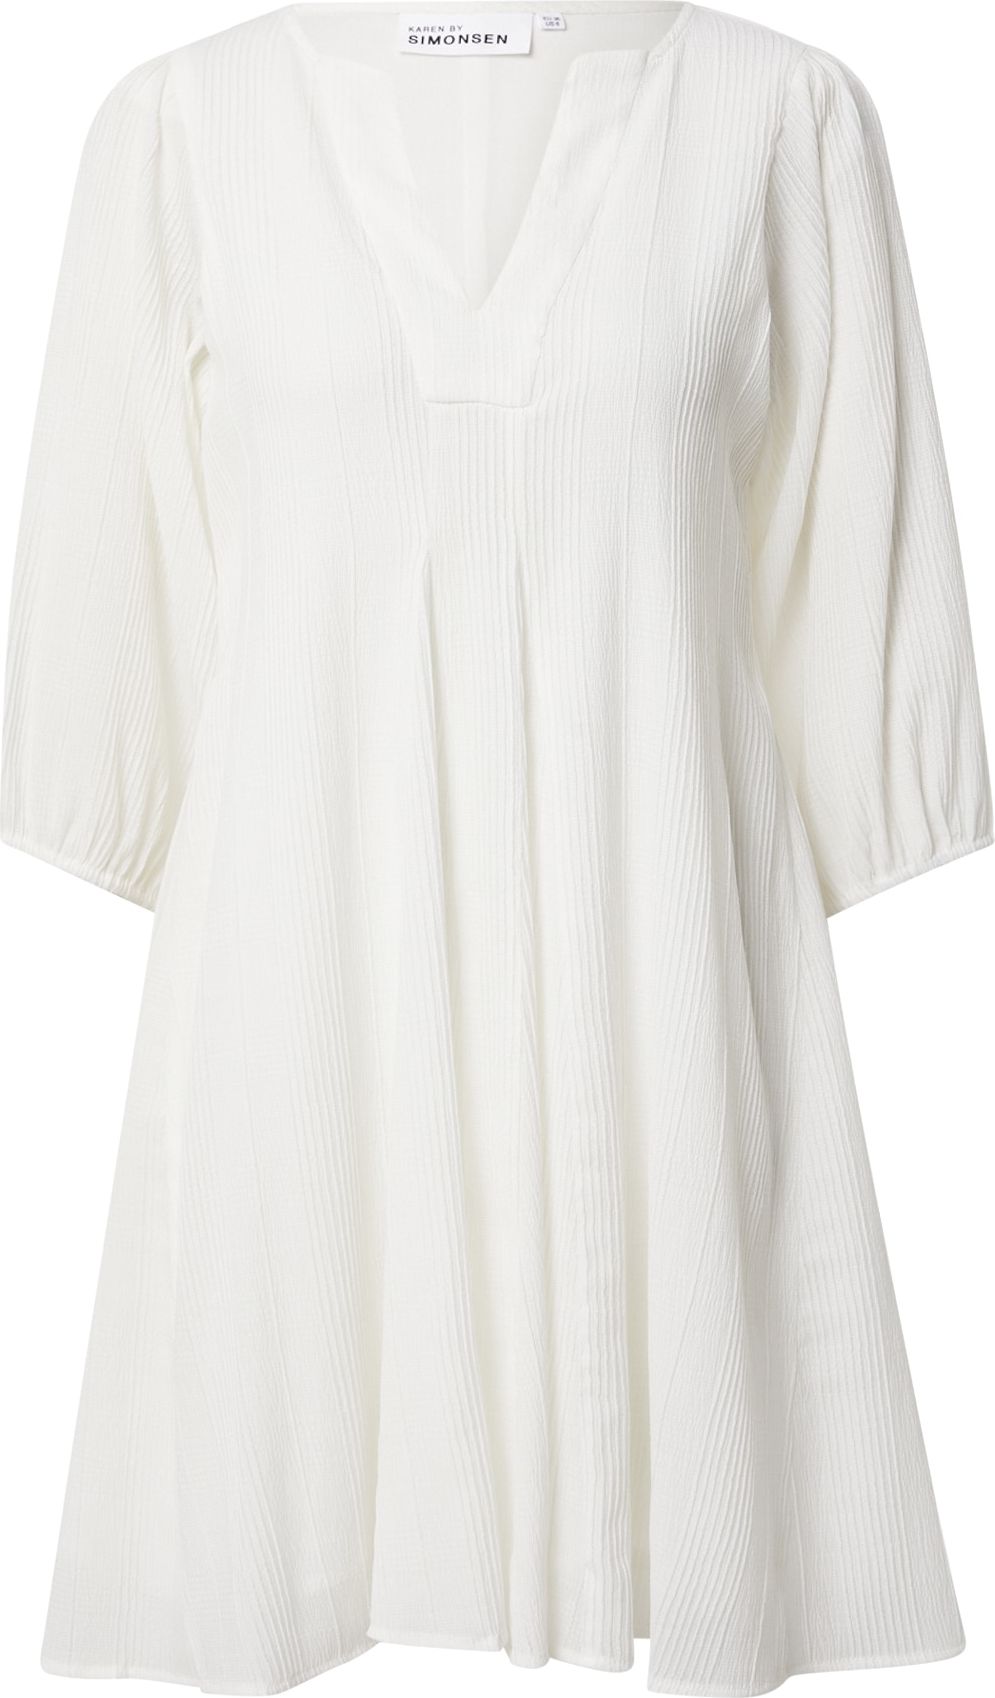 KAREN BY SIMONSEN Košilové šaty 'Grant' bílá